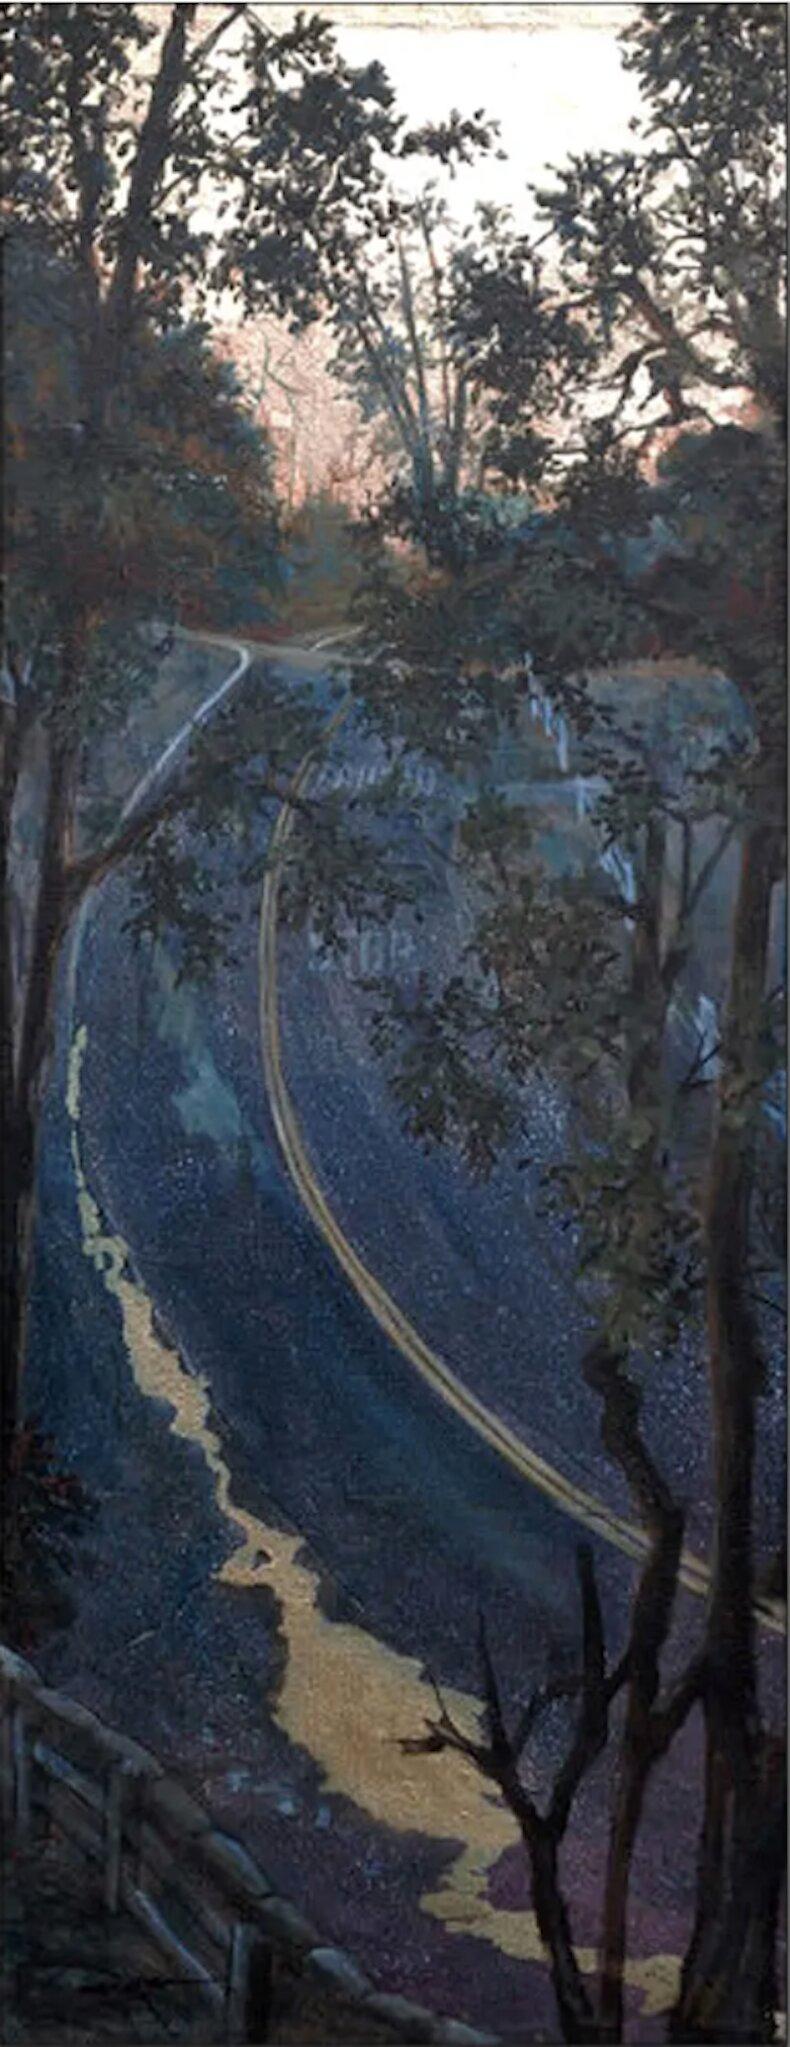 Duke Windsor Landscape Painting - Impressionistic Cityscape Acrylic Painting, "Stop Ahead"